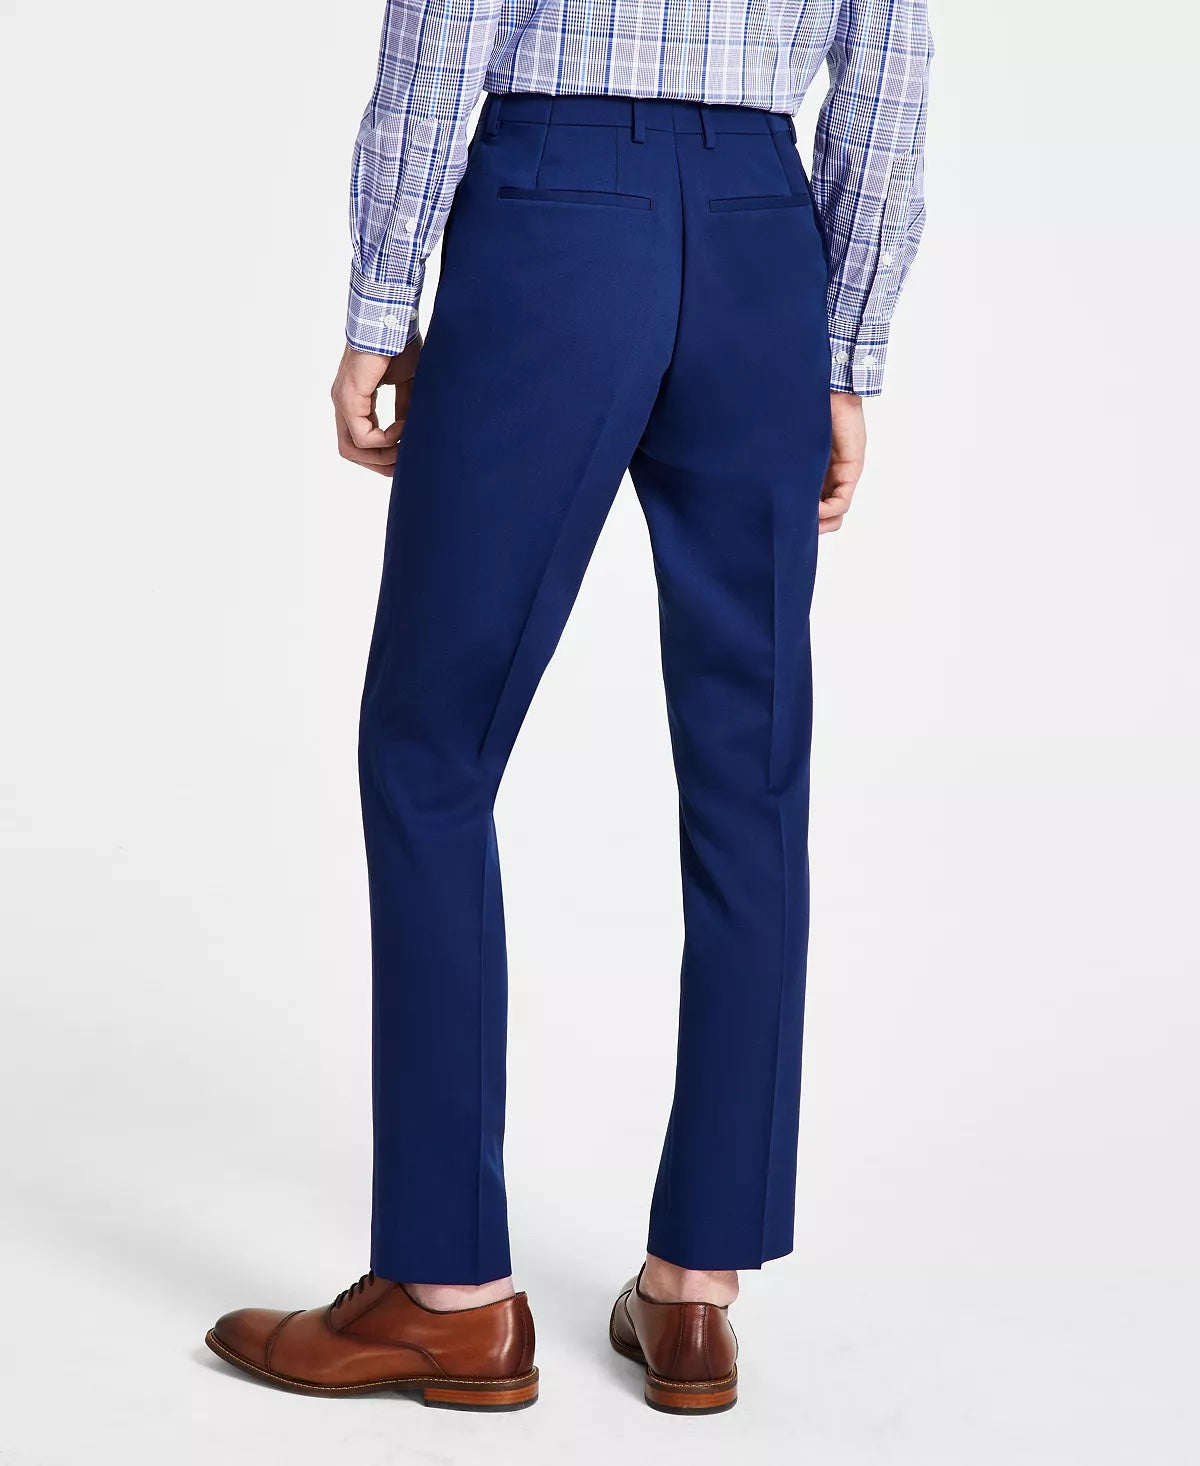 DKNY Men's Dress Pants Blue 30 x 32 Modern-Fit Solid